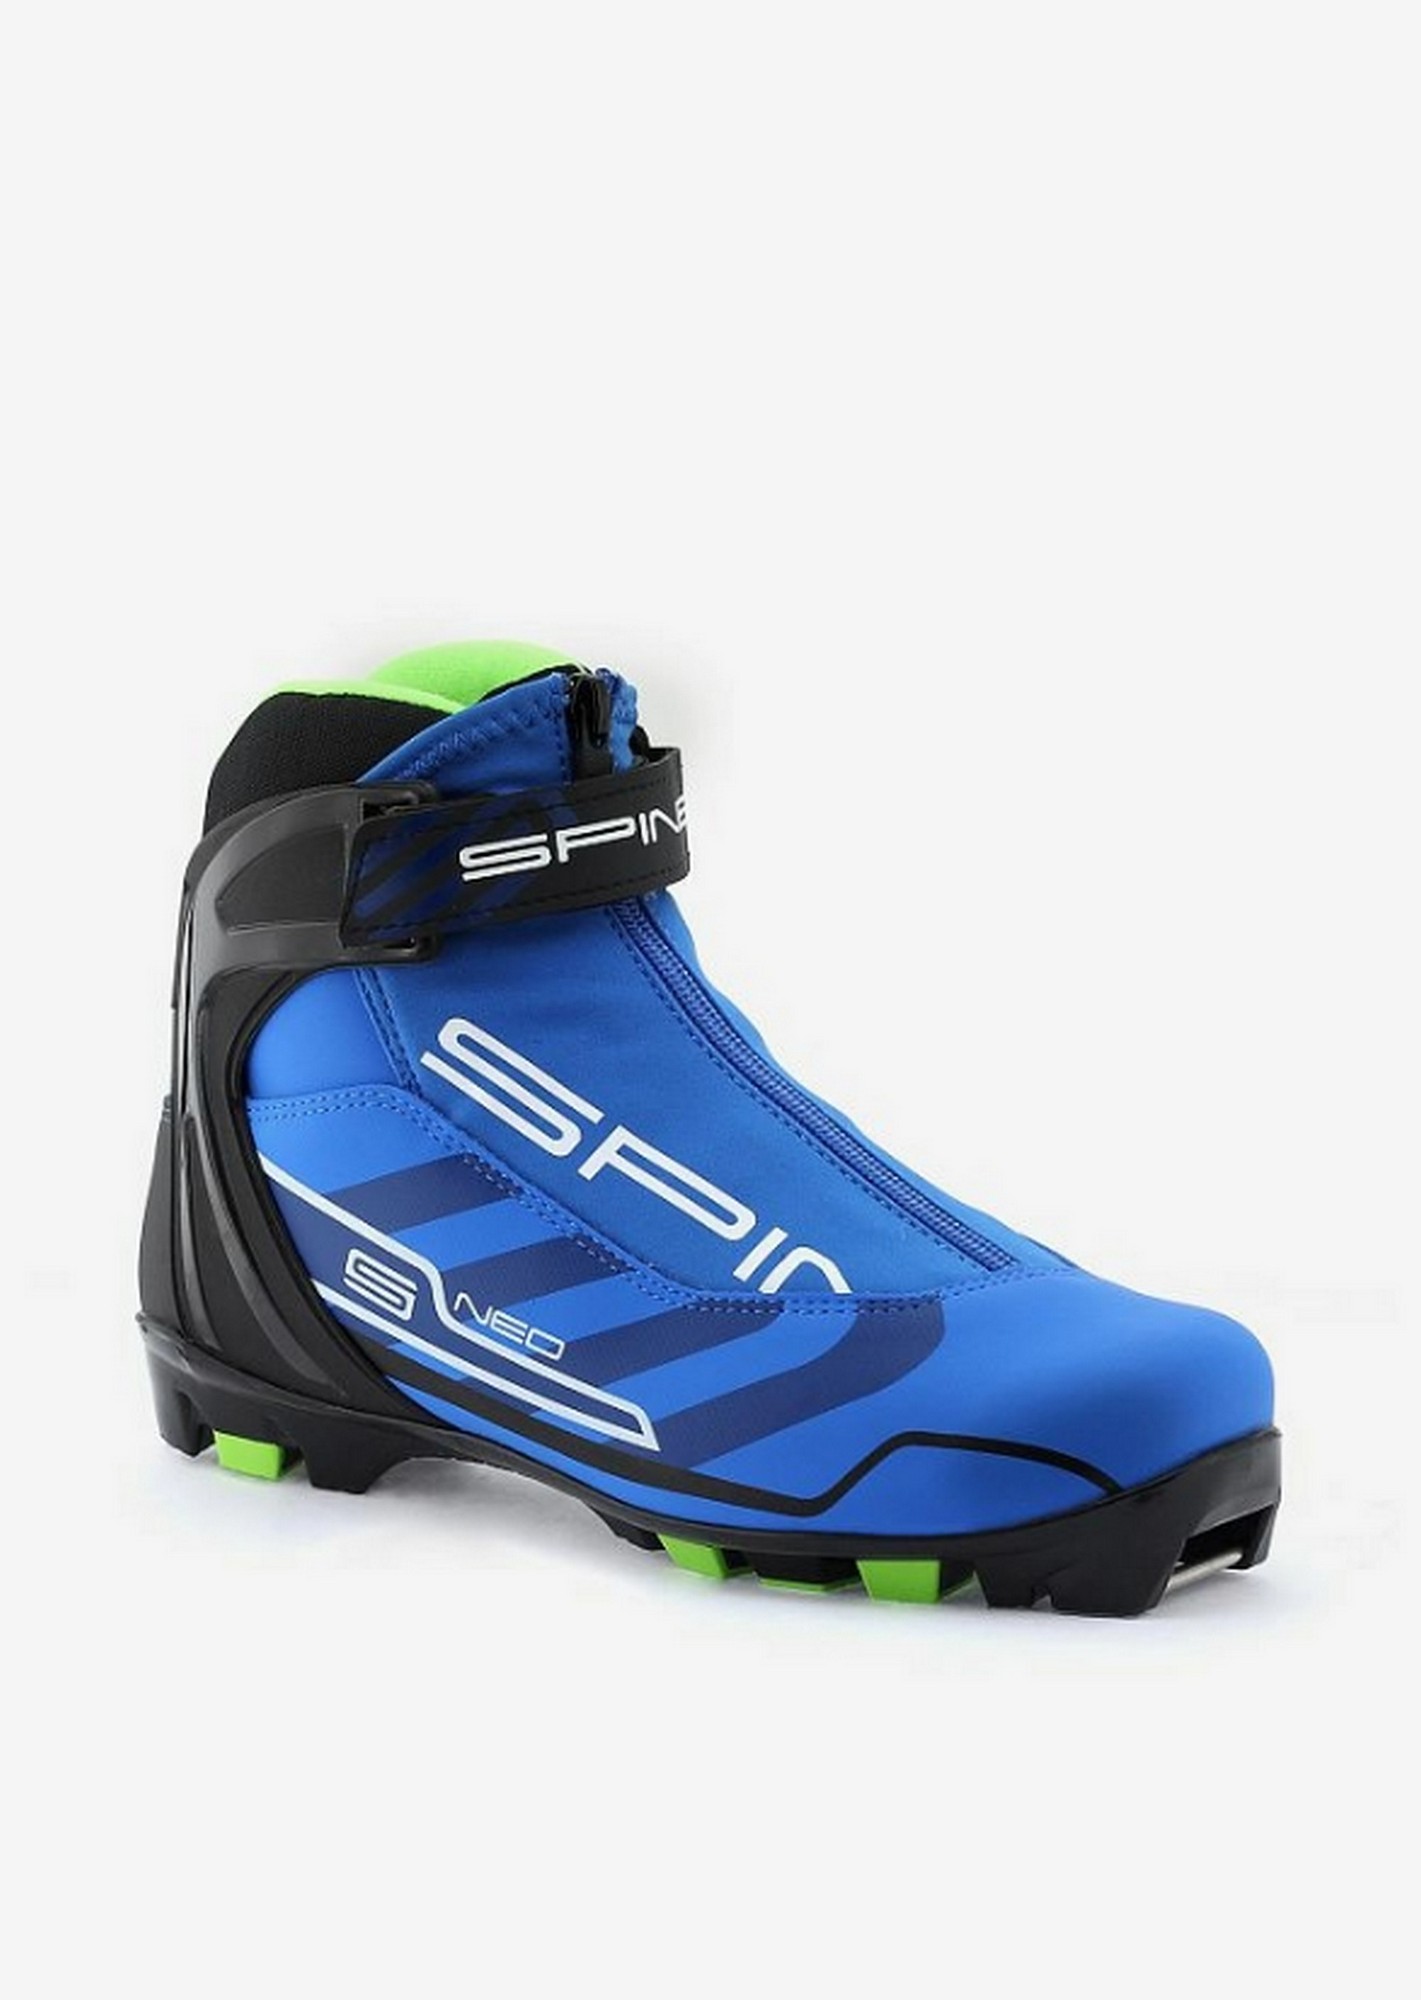 Лыжные ботинки NNN Spine Neo 161/1-22 синий 1421_2000